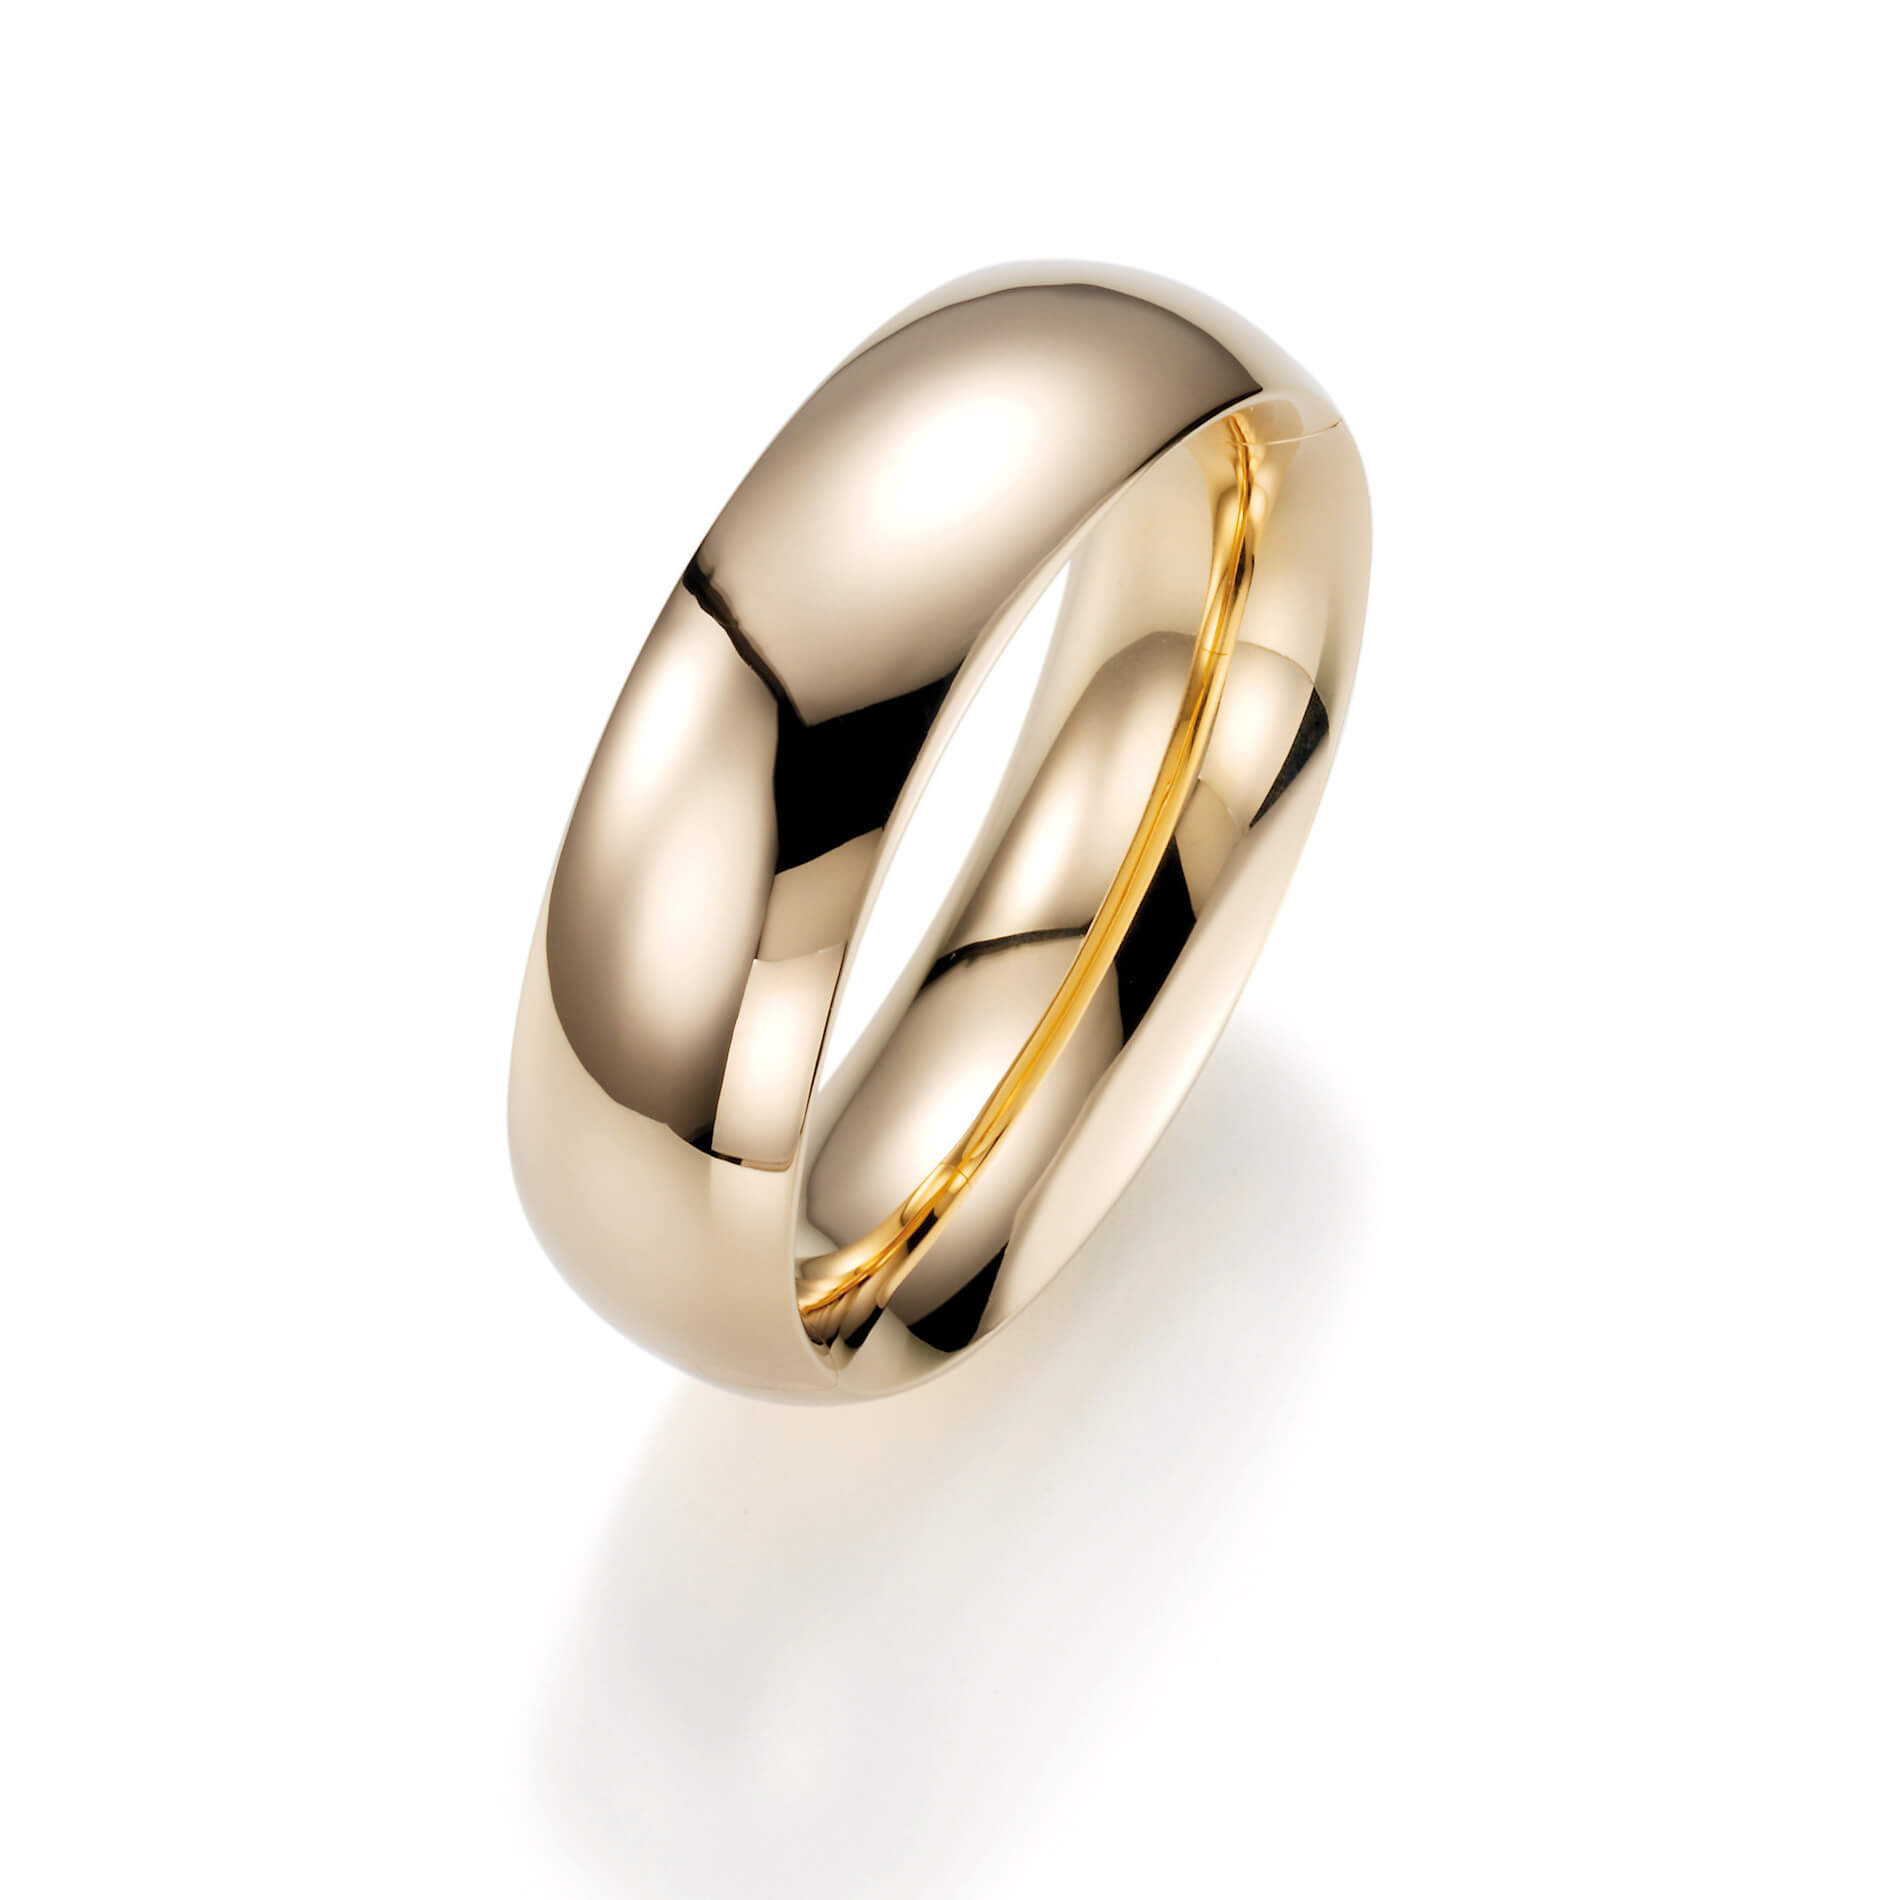 Hurtownia Niestandardowa hurtownia OEM/ODM Biżuteria dostawca biżuterii srebrnej i złotej